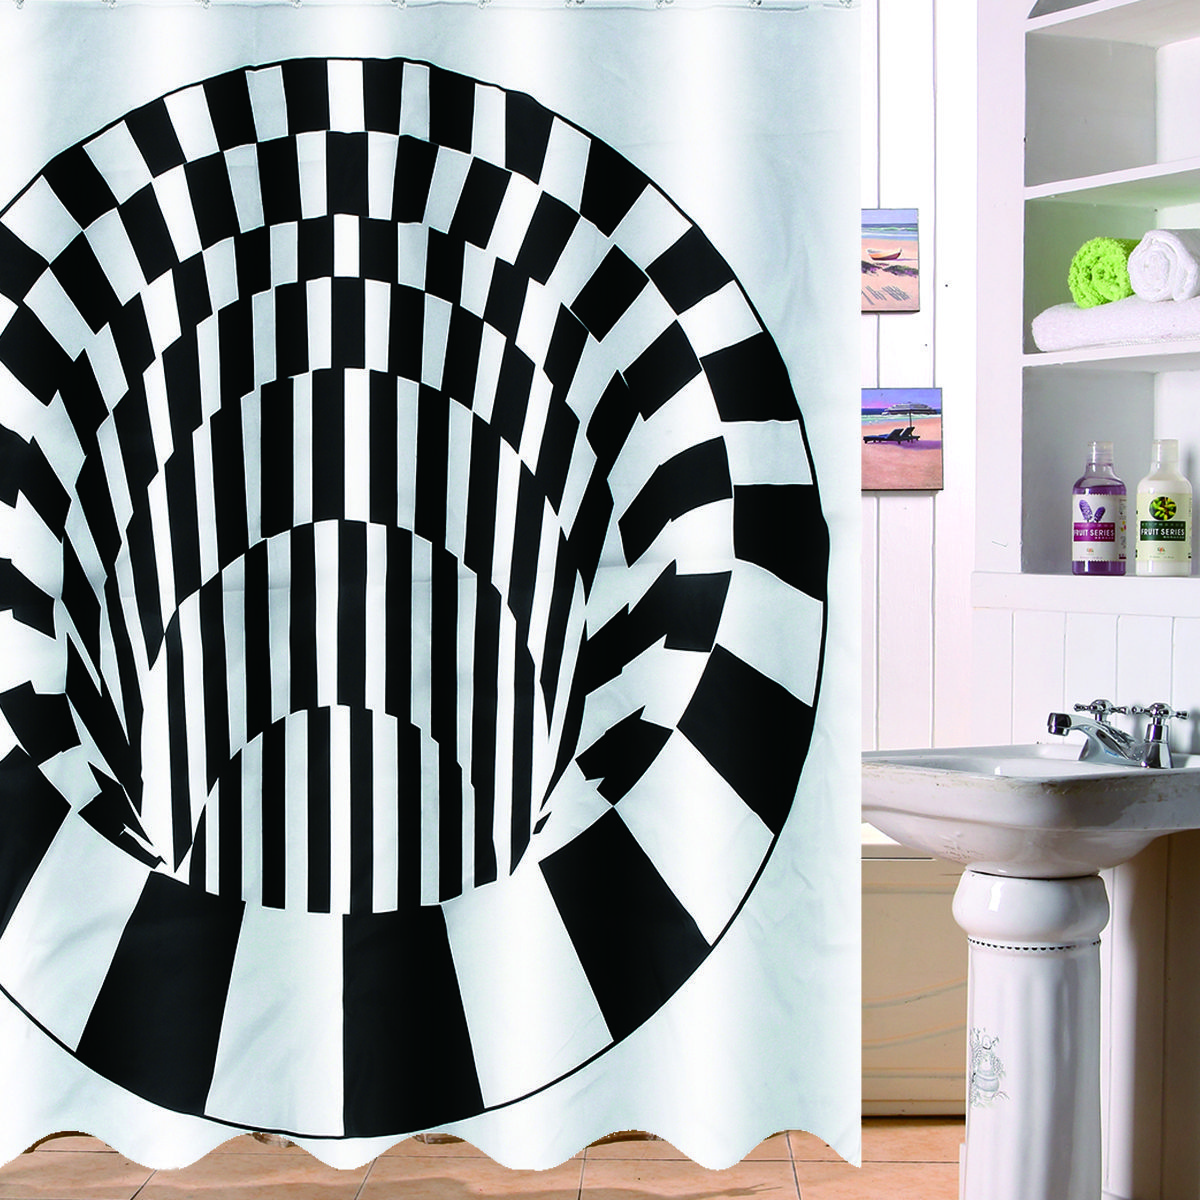 3D-Effect-Geometric-Square-Bathroom-Bath-Shower-Curtain-180180cm-w-12-1530246